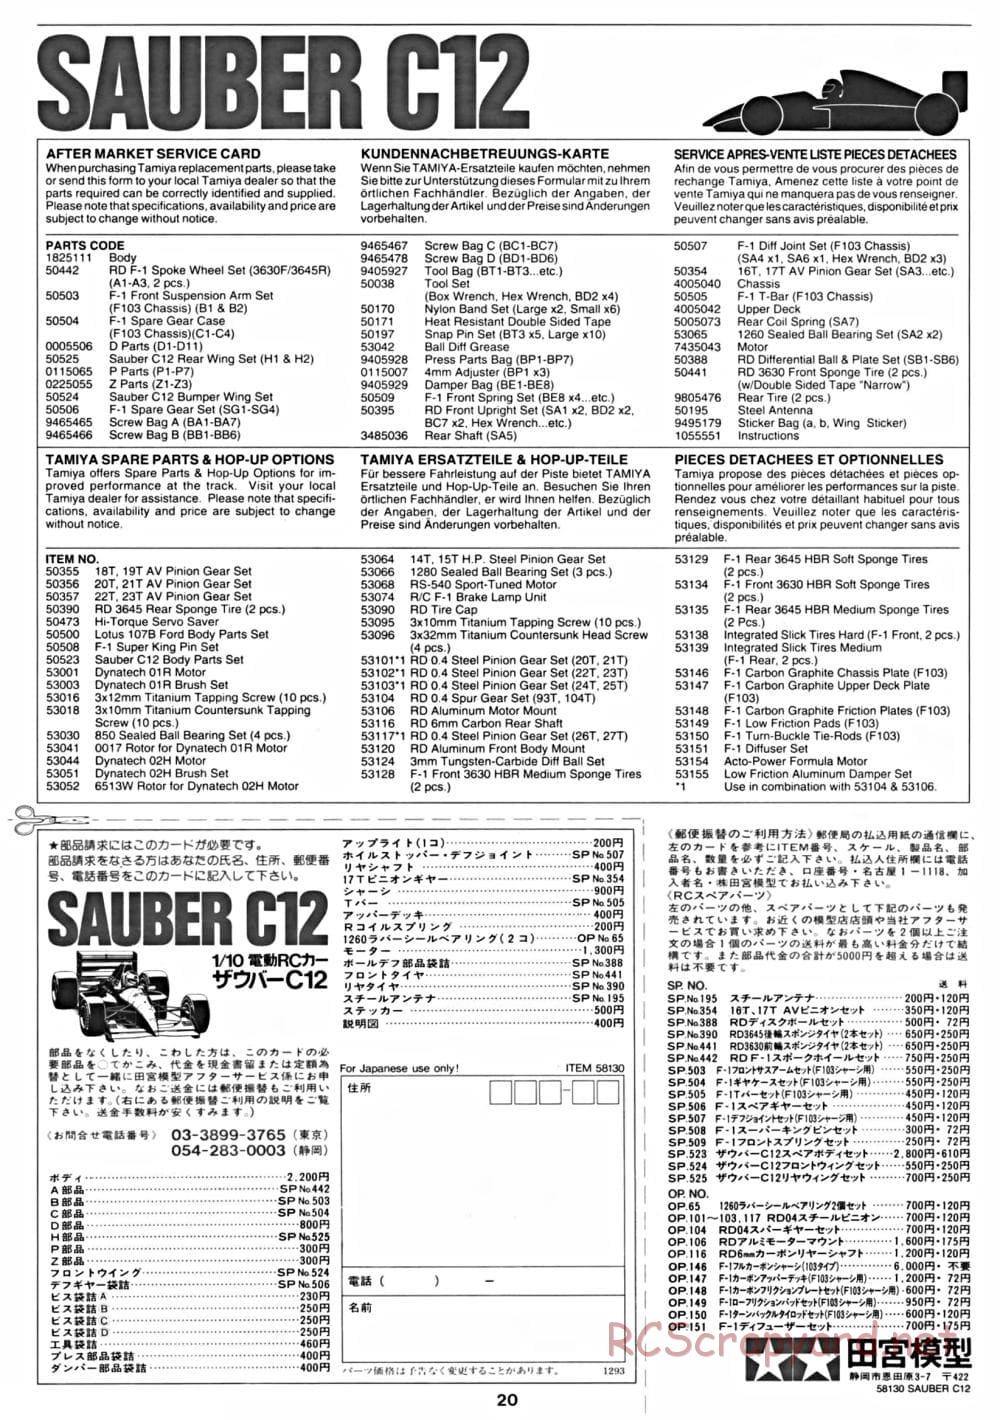 Tamiya - Sauber C12 - F103 Chassis - Manual - Page 20